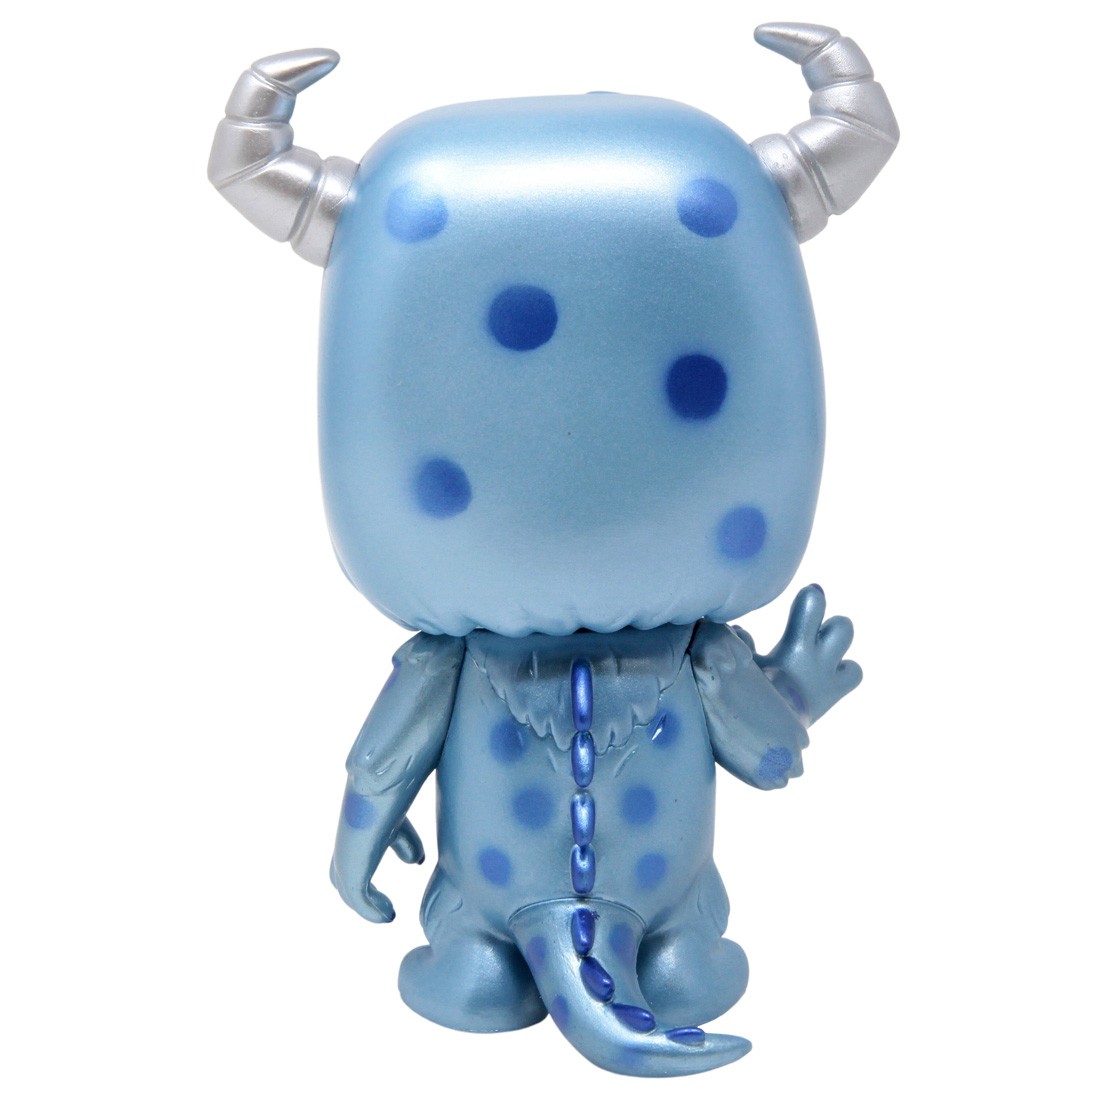 Funko POP With Purpose Pixar Make A Wish - Sulley Metallic blue